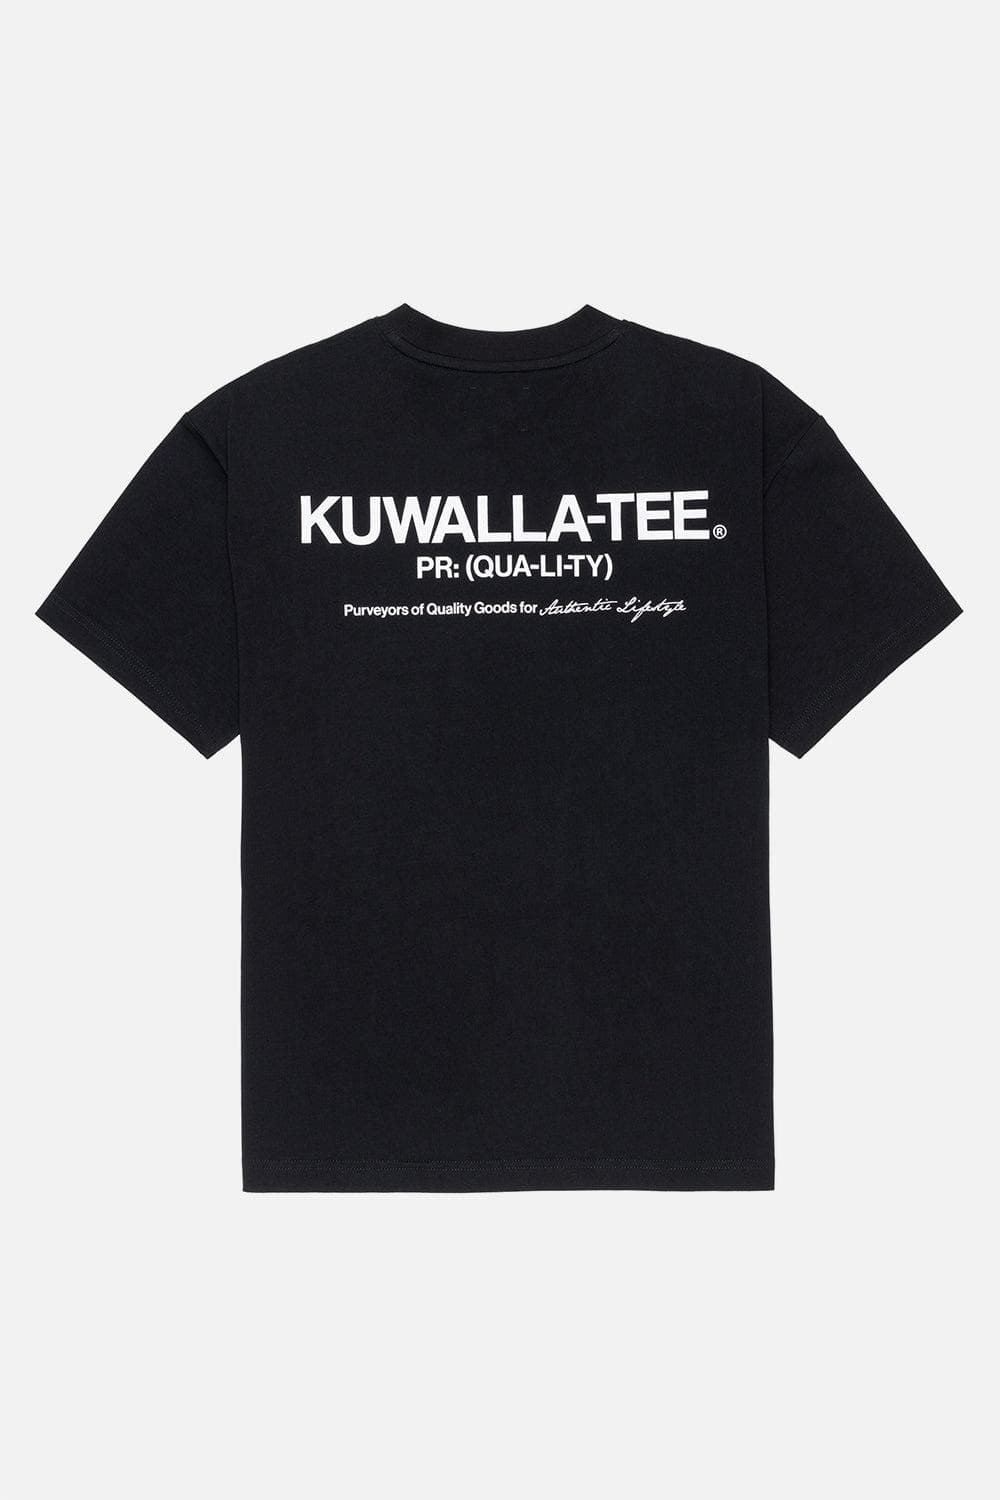 Kuwalla Tee  Save Fashion W/ Montreal Streetwear #cometogether - Best Kept  MTL